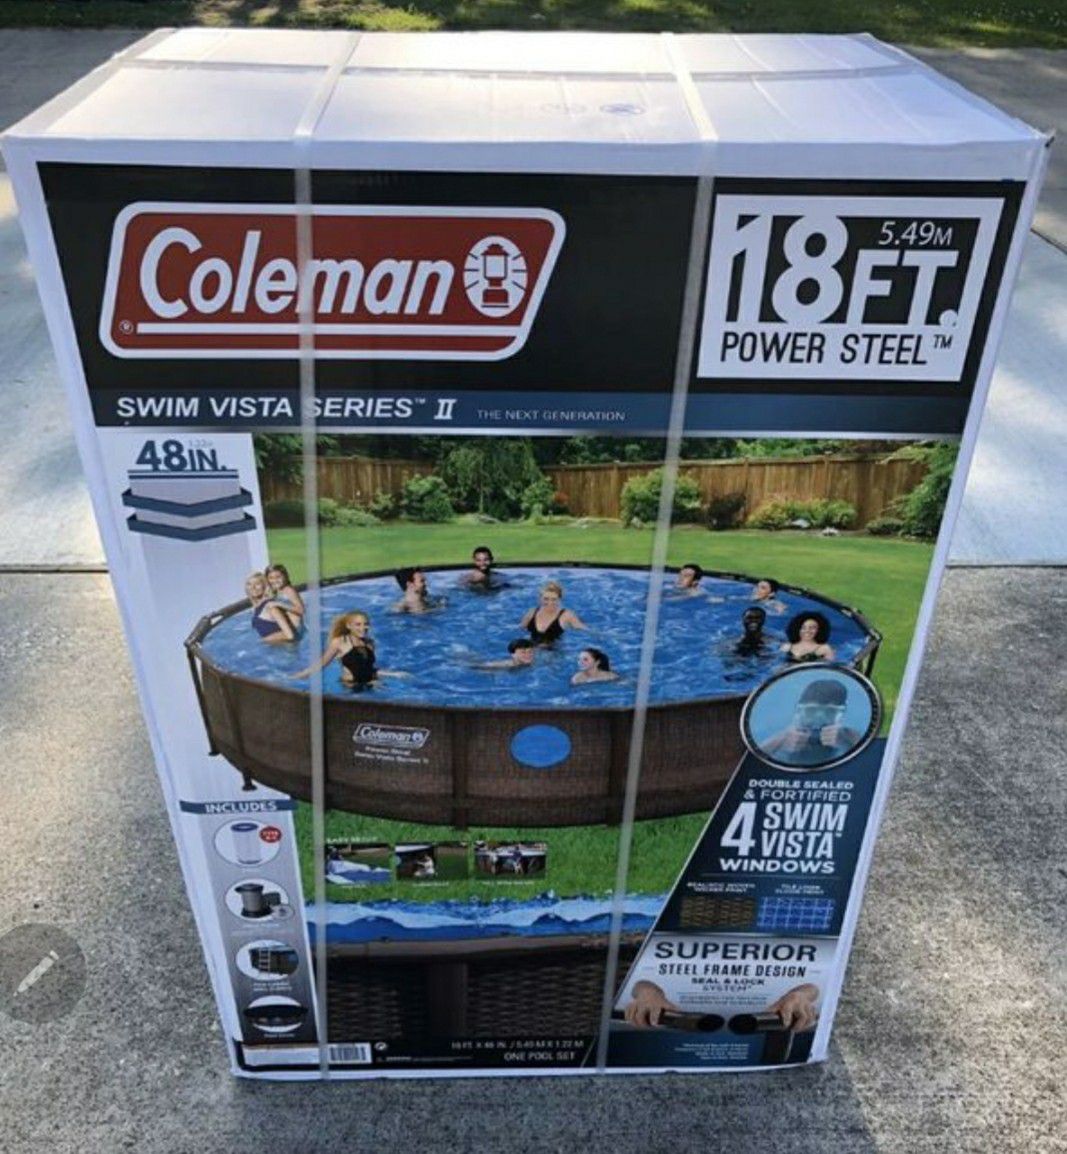 Brand new coleman pool 18' x 48"